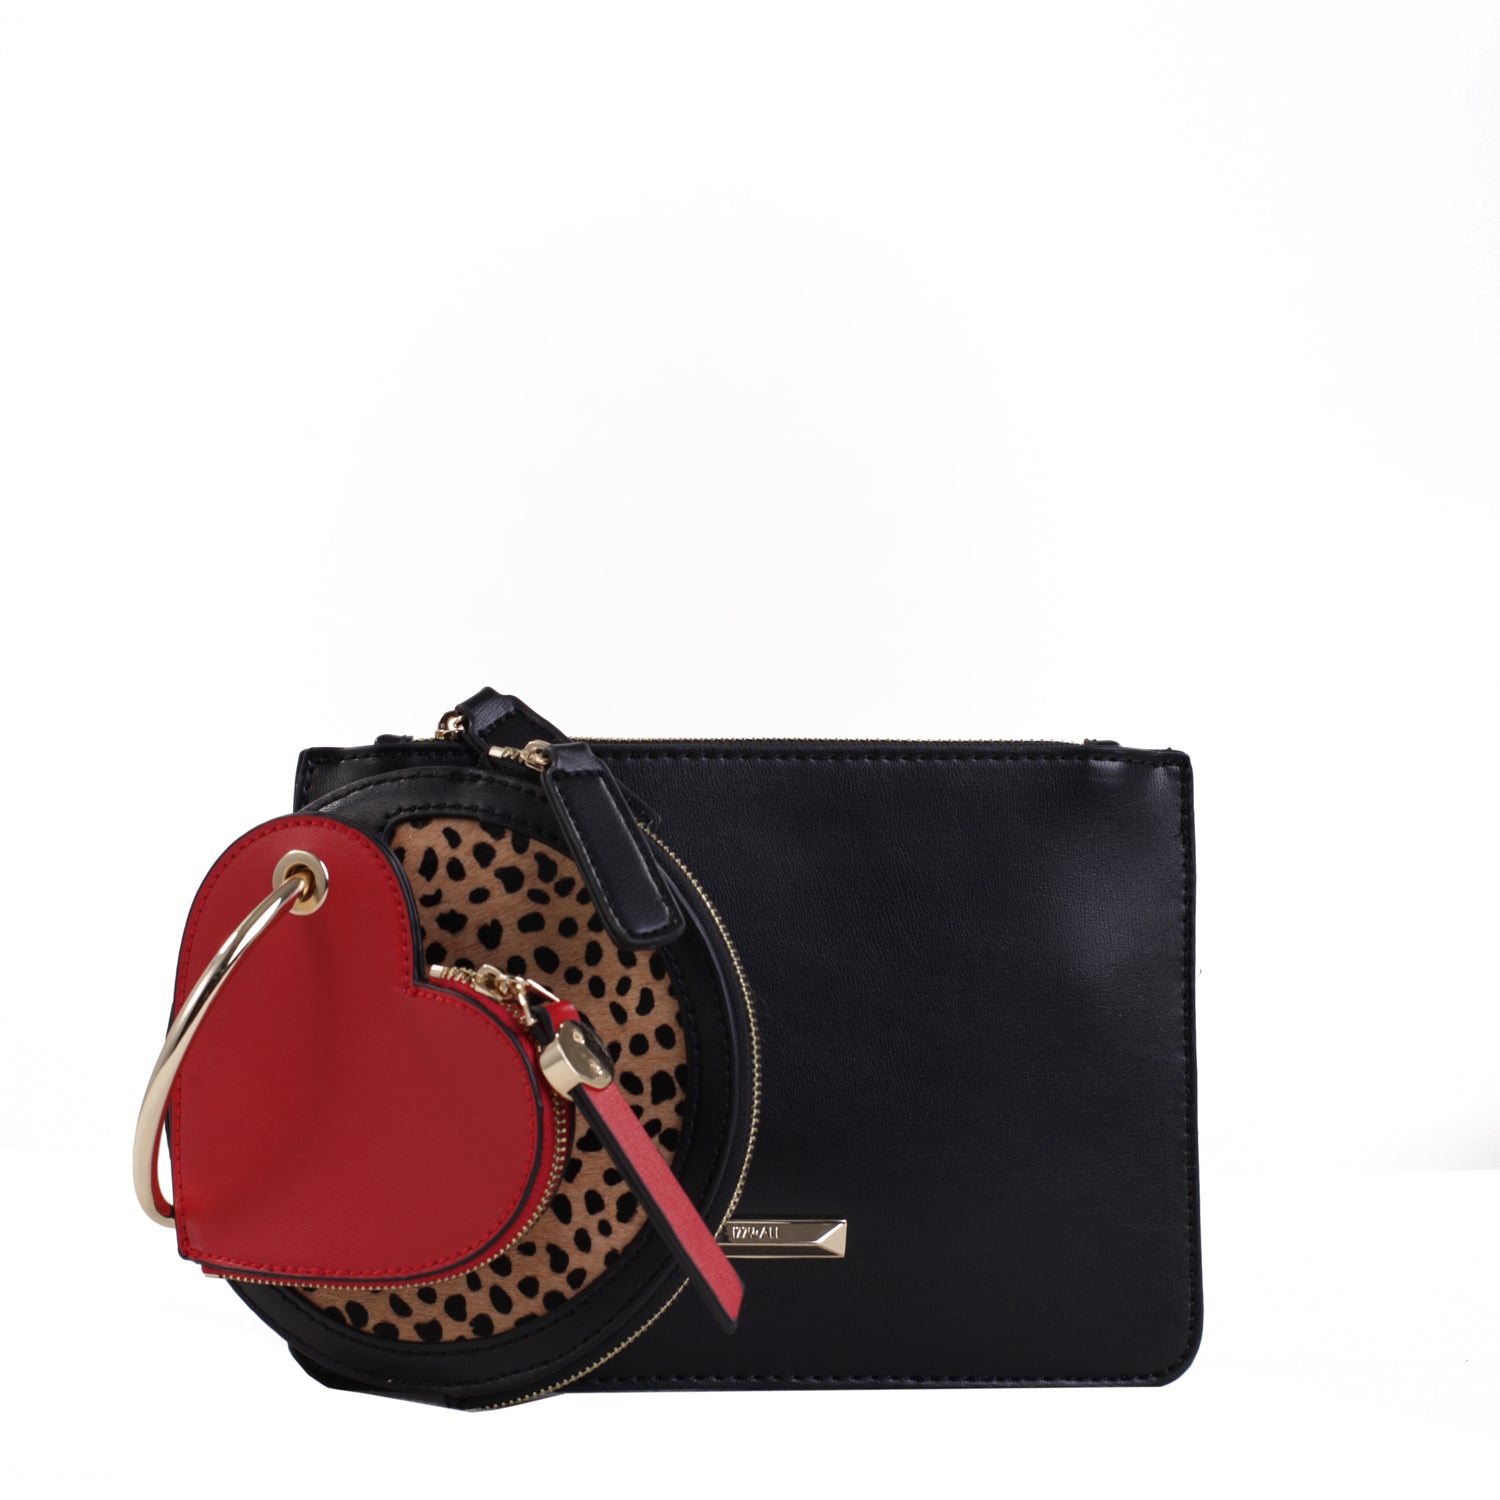 Oweisong Women Red Heart Purse Cute Black Heart Shaped Crossbody Bag Mini  Ladies Chain Clutch Shoulder Handbags: Handbags